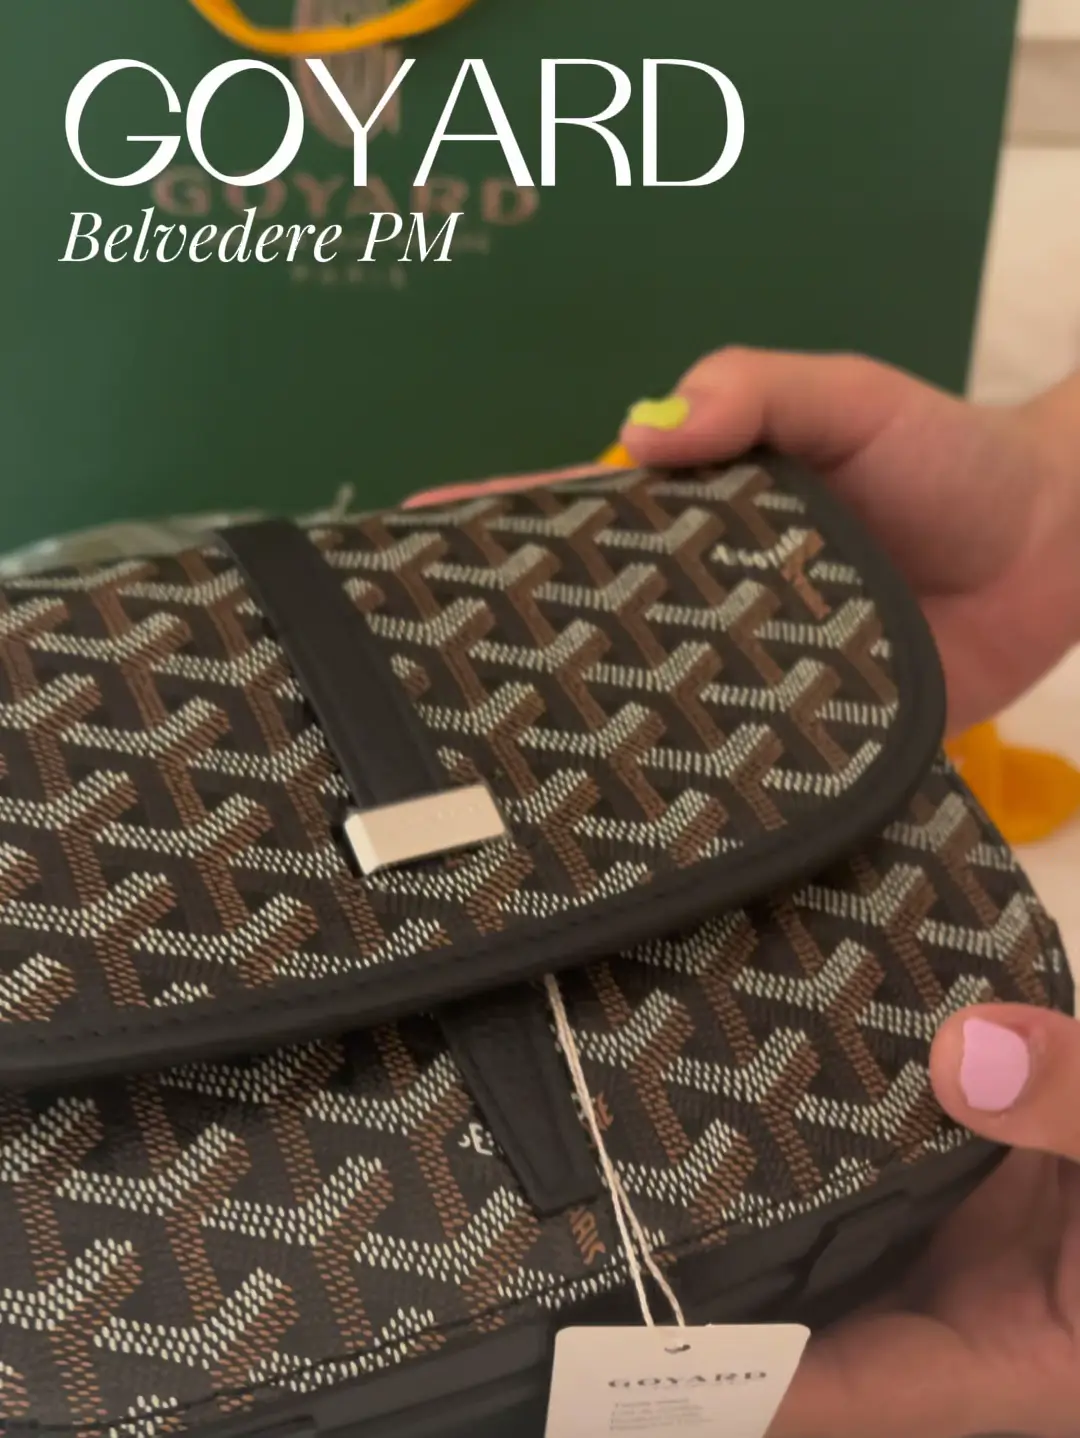 belvedere pm bag price 2022